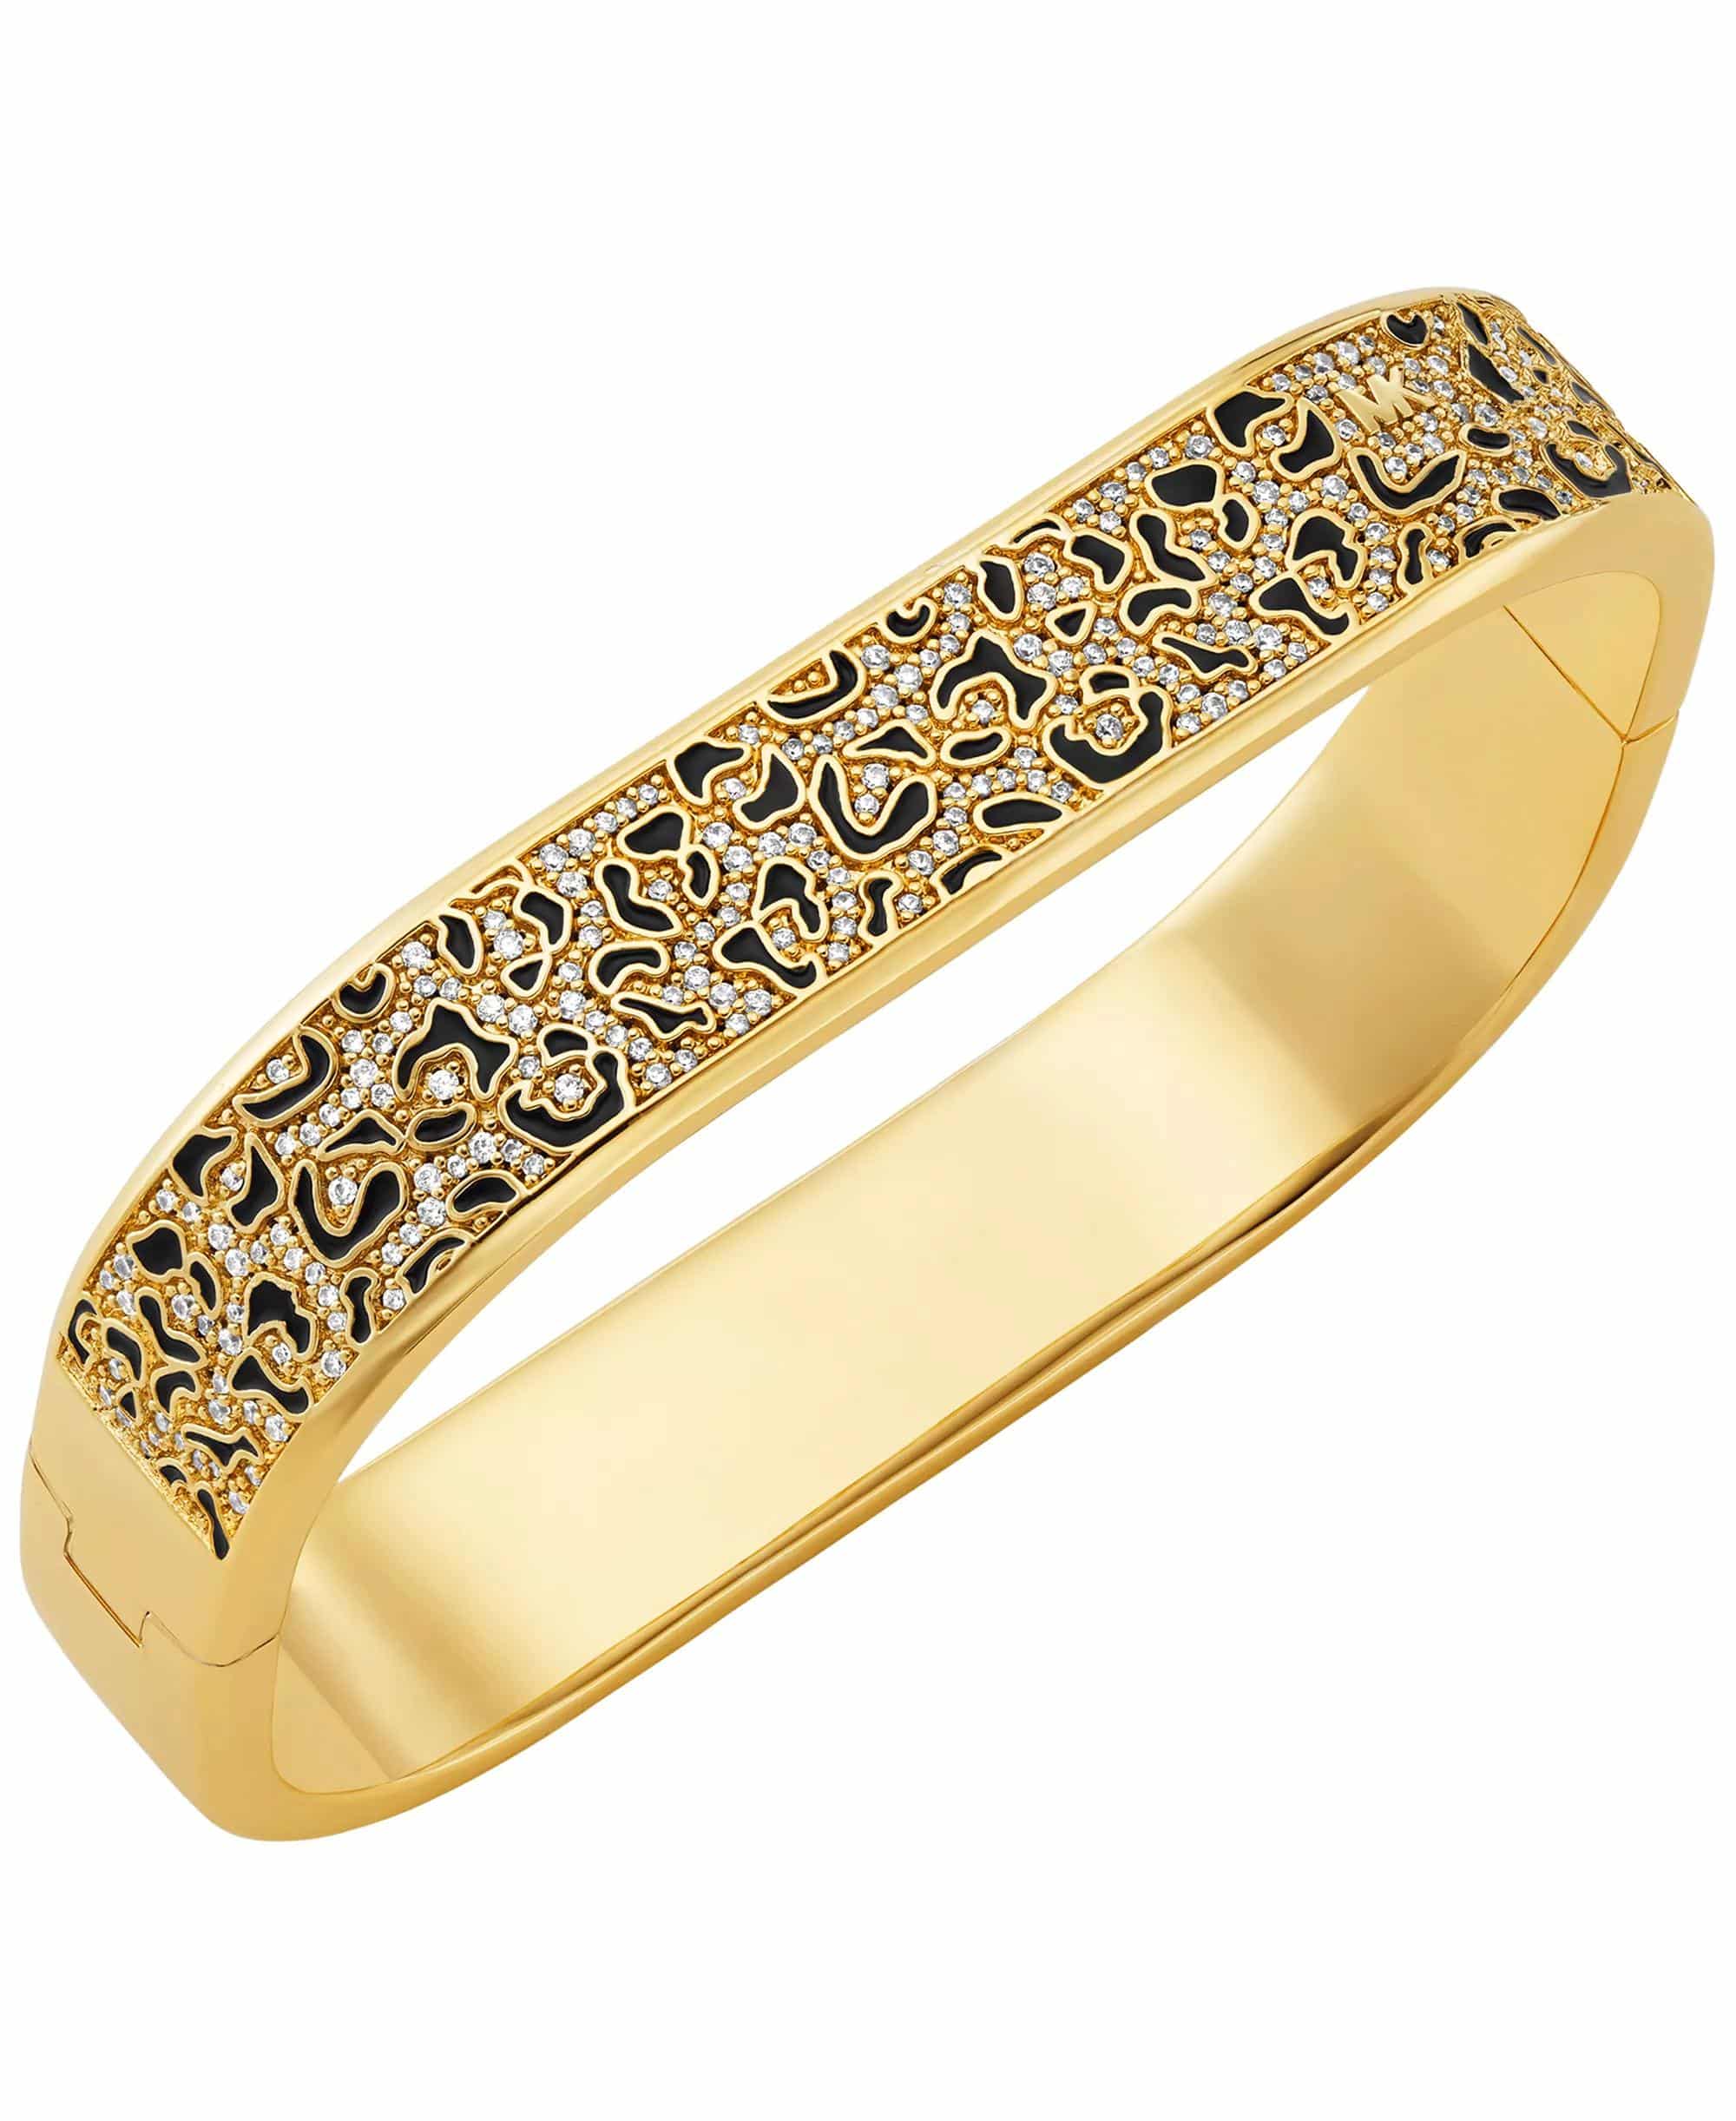 Michael Kors Armbanden - 14K Gold-Plated Cheetah Print Bangle Bracelet in gold